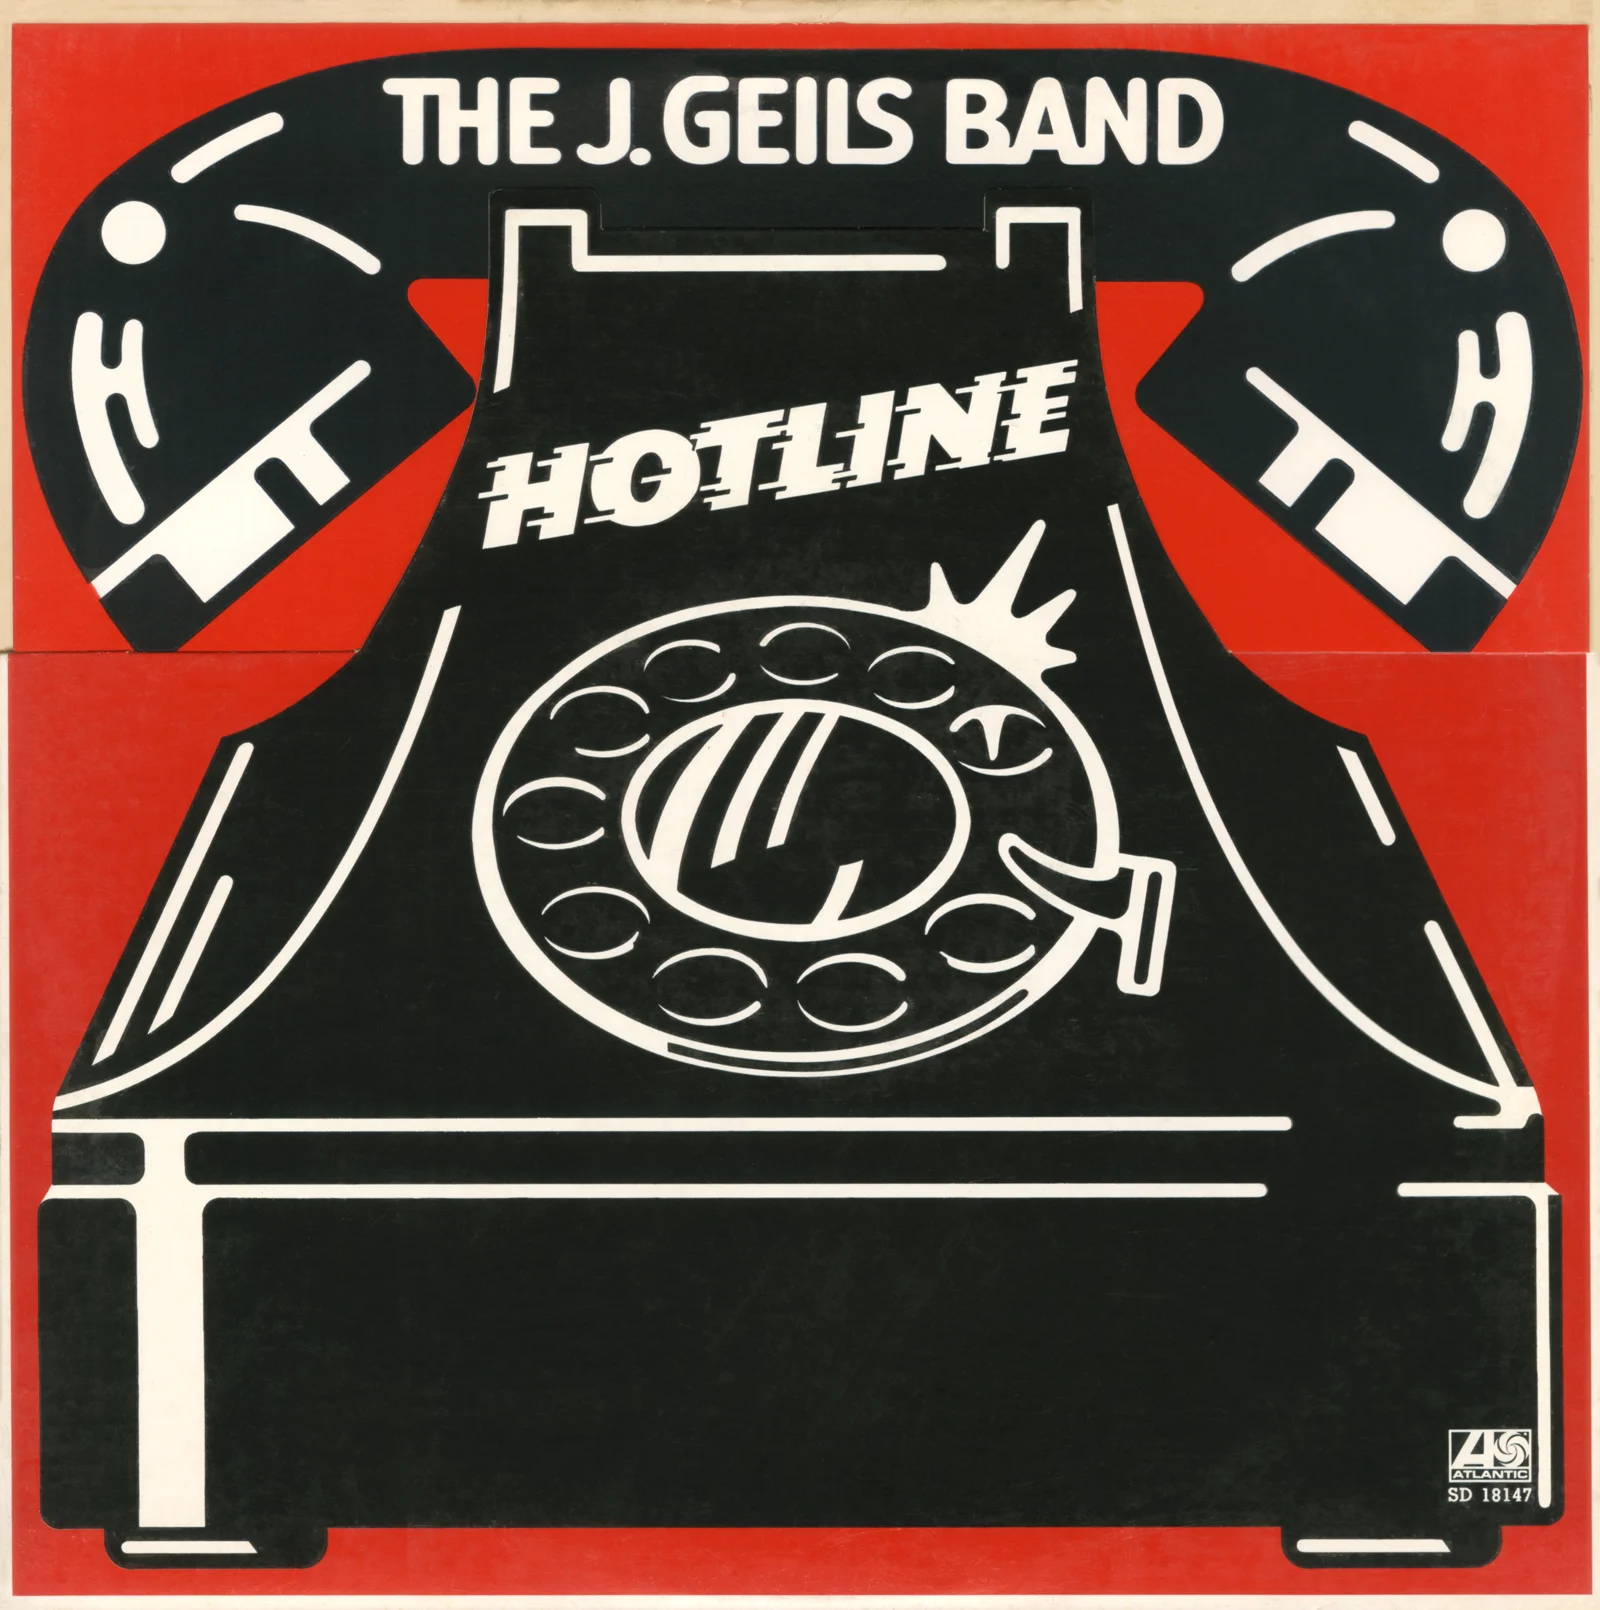 Hotline – The J. Geils Band